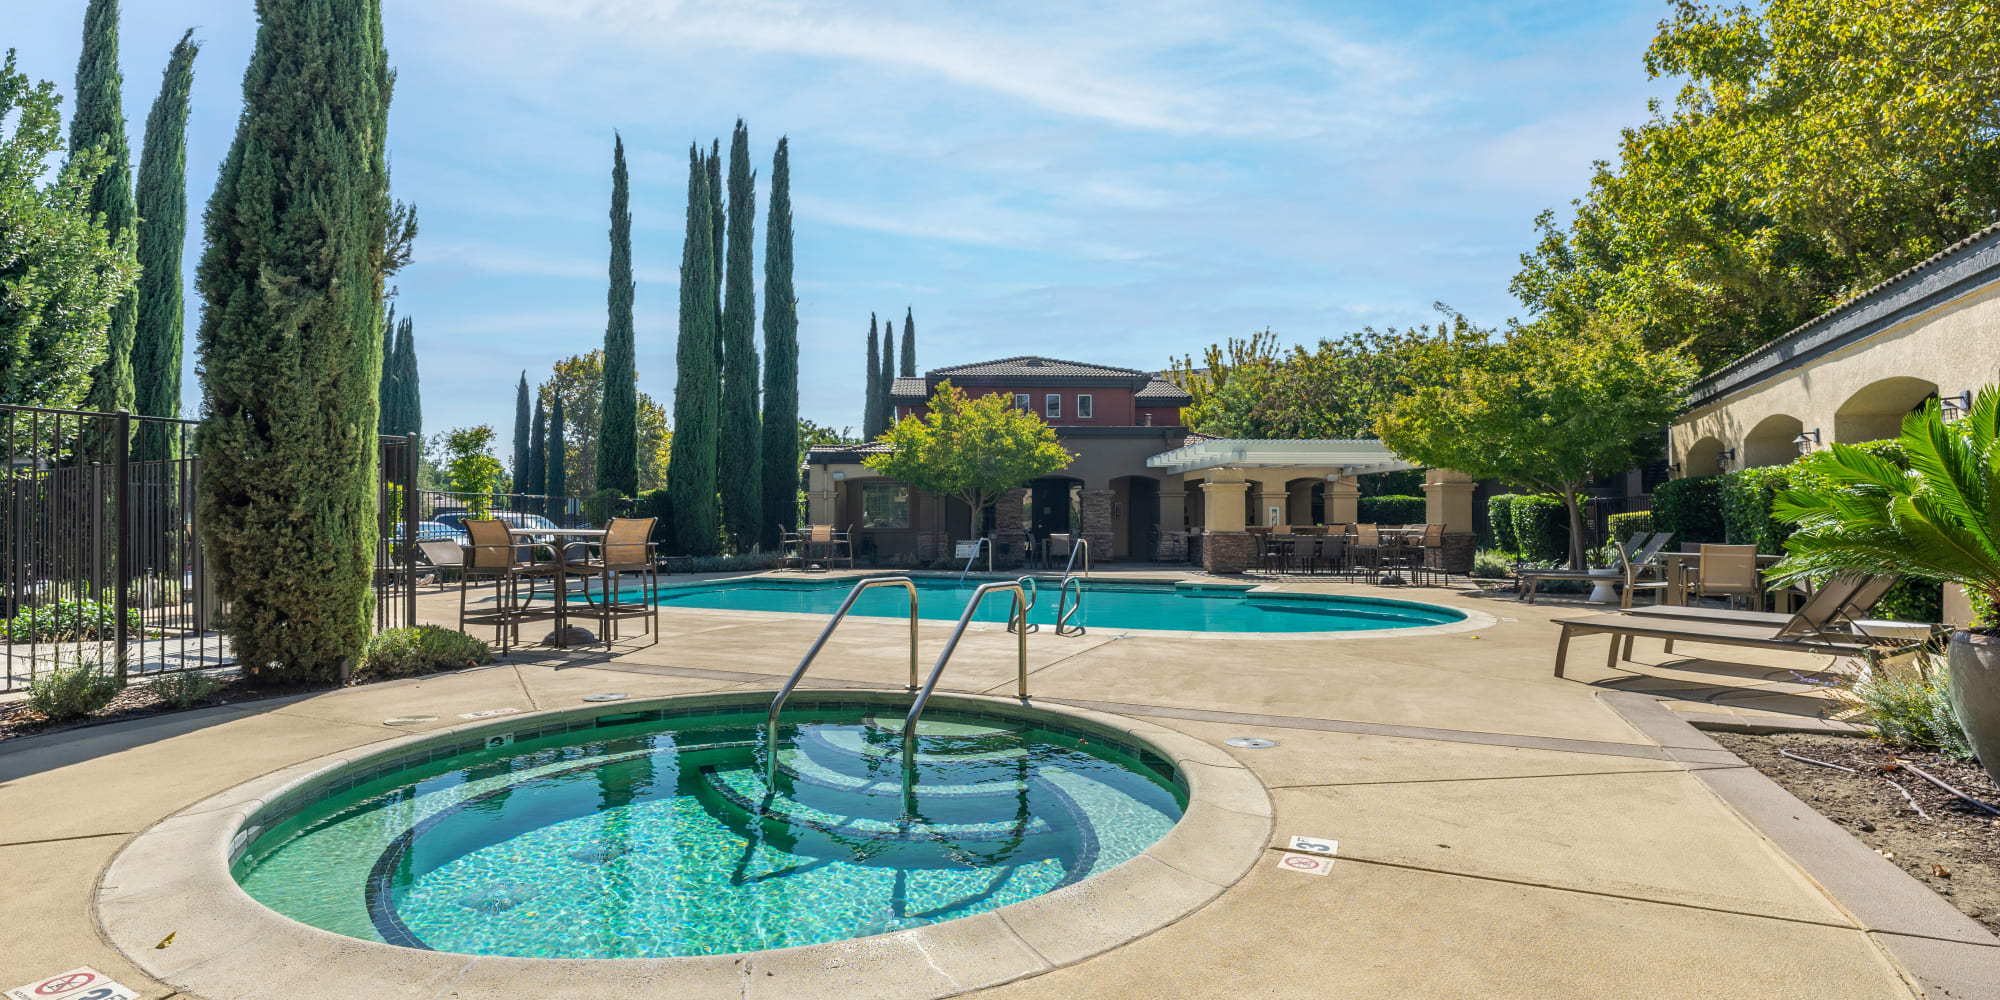 Hot tub at Villagio Luxury Apartments in Sacramento, California